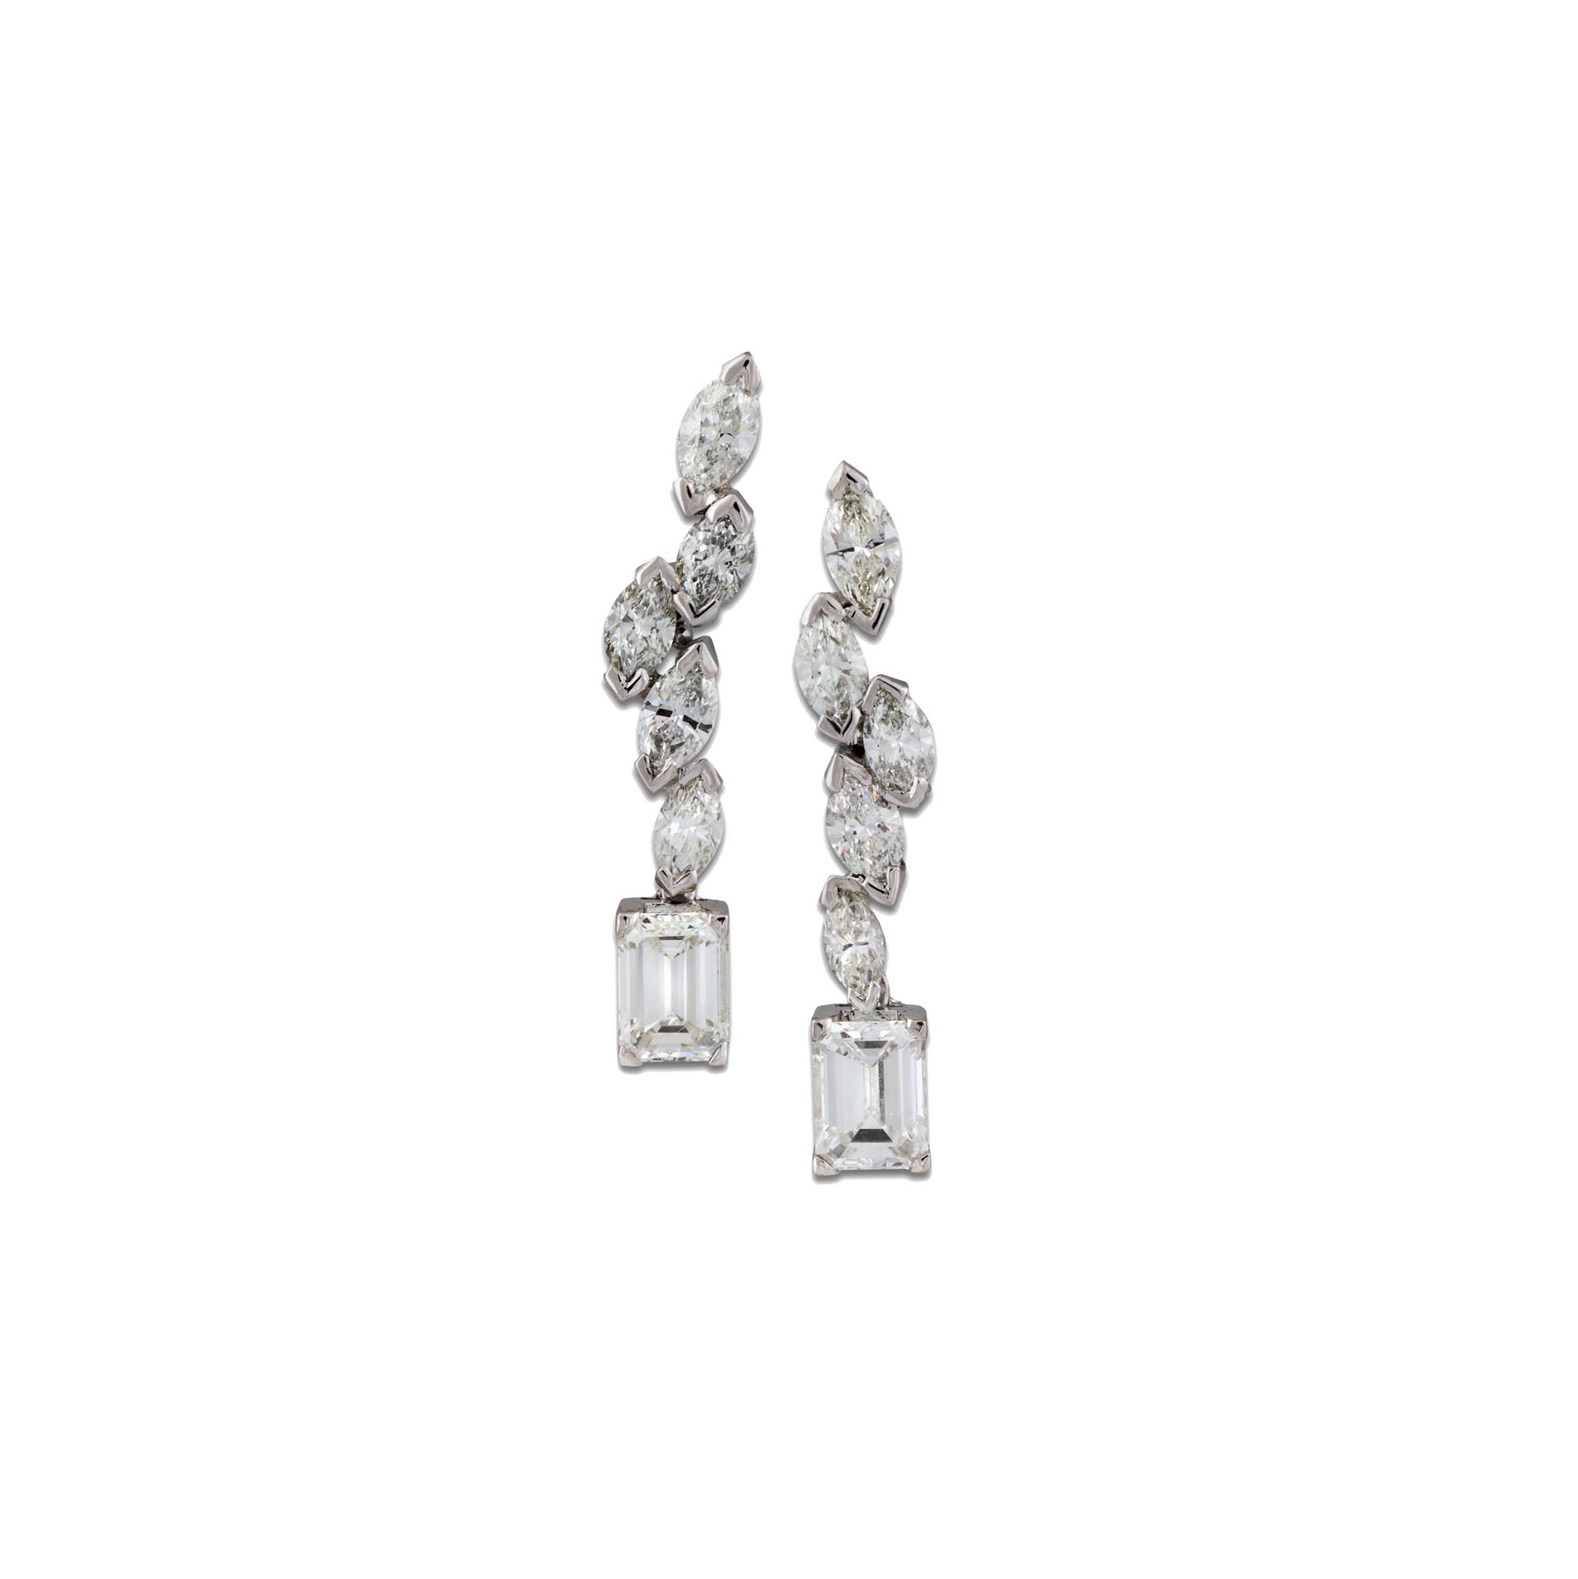 Marquis diamond earrings